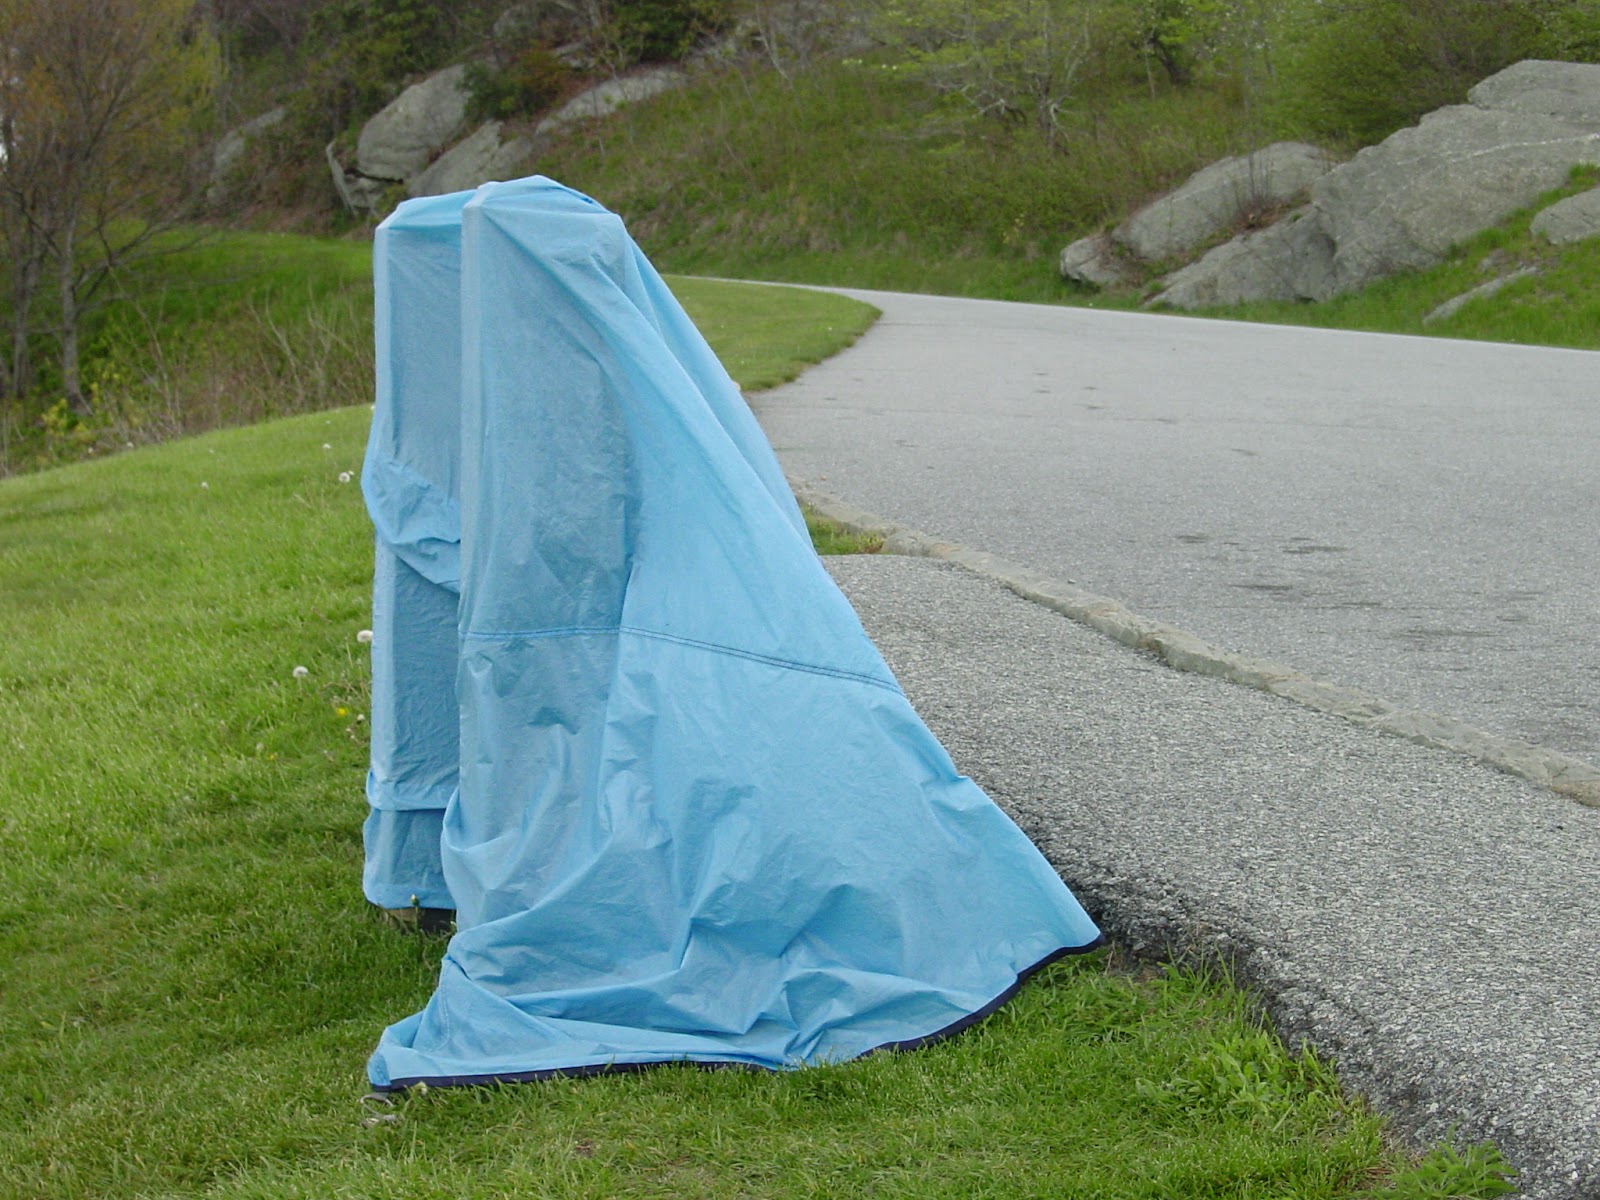 A blue tarp over a roadside sign.